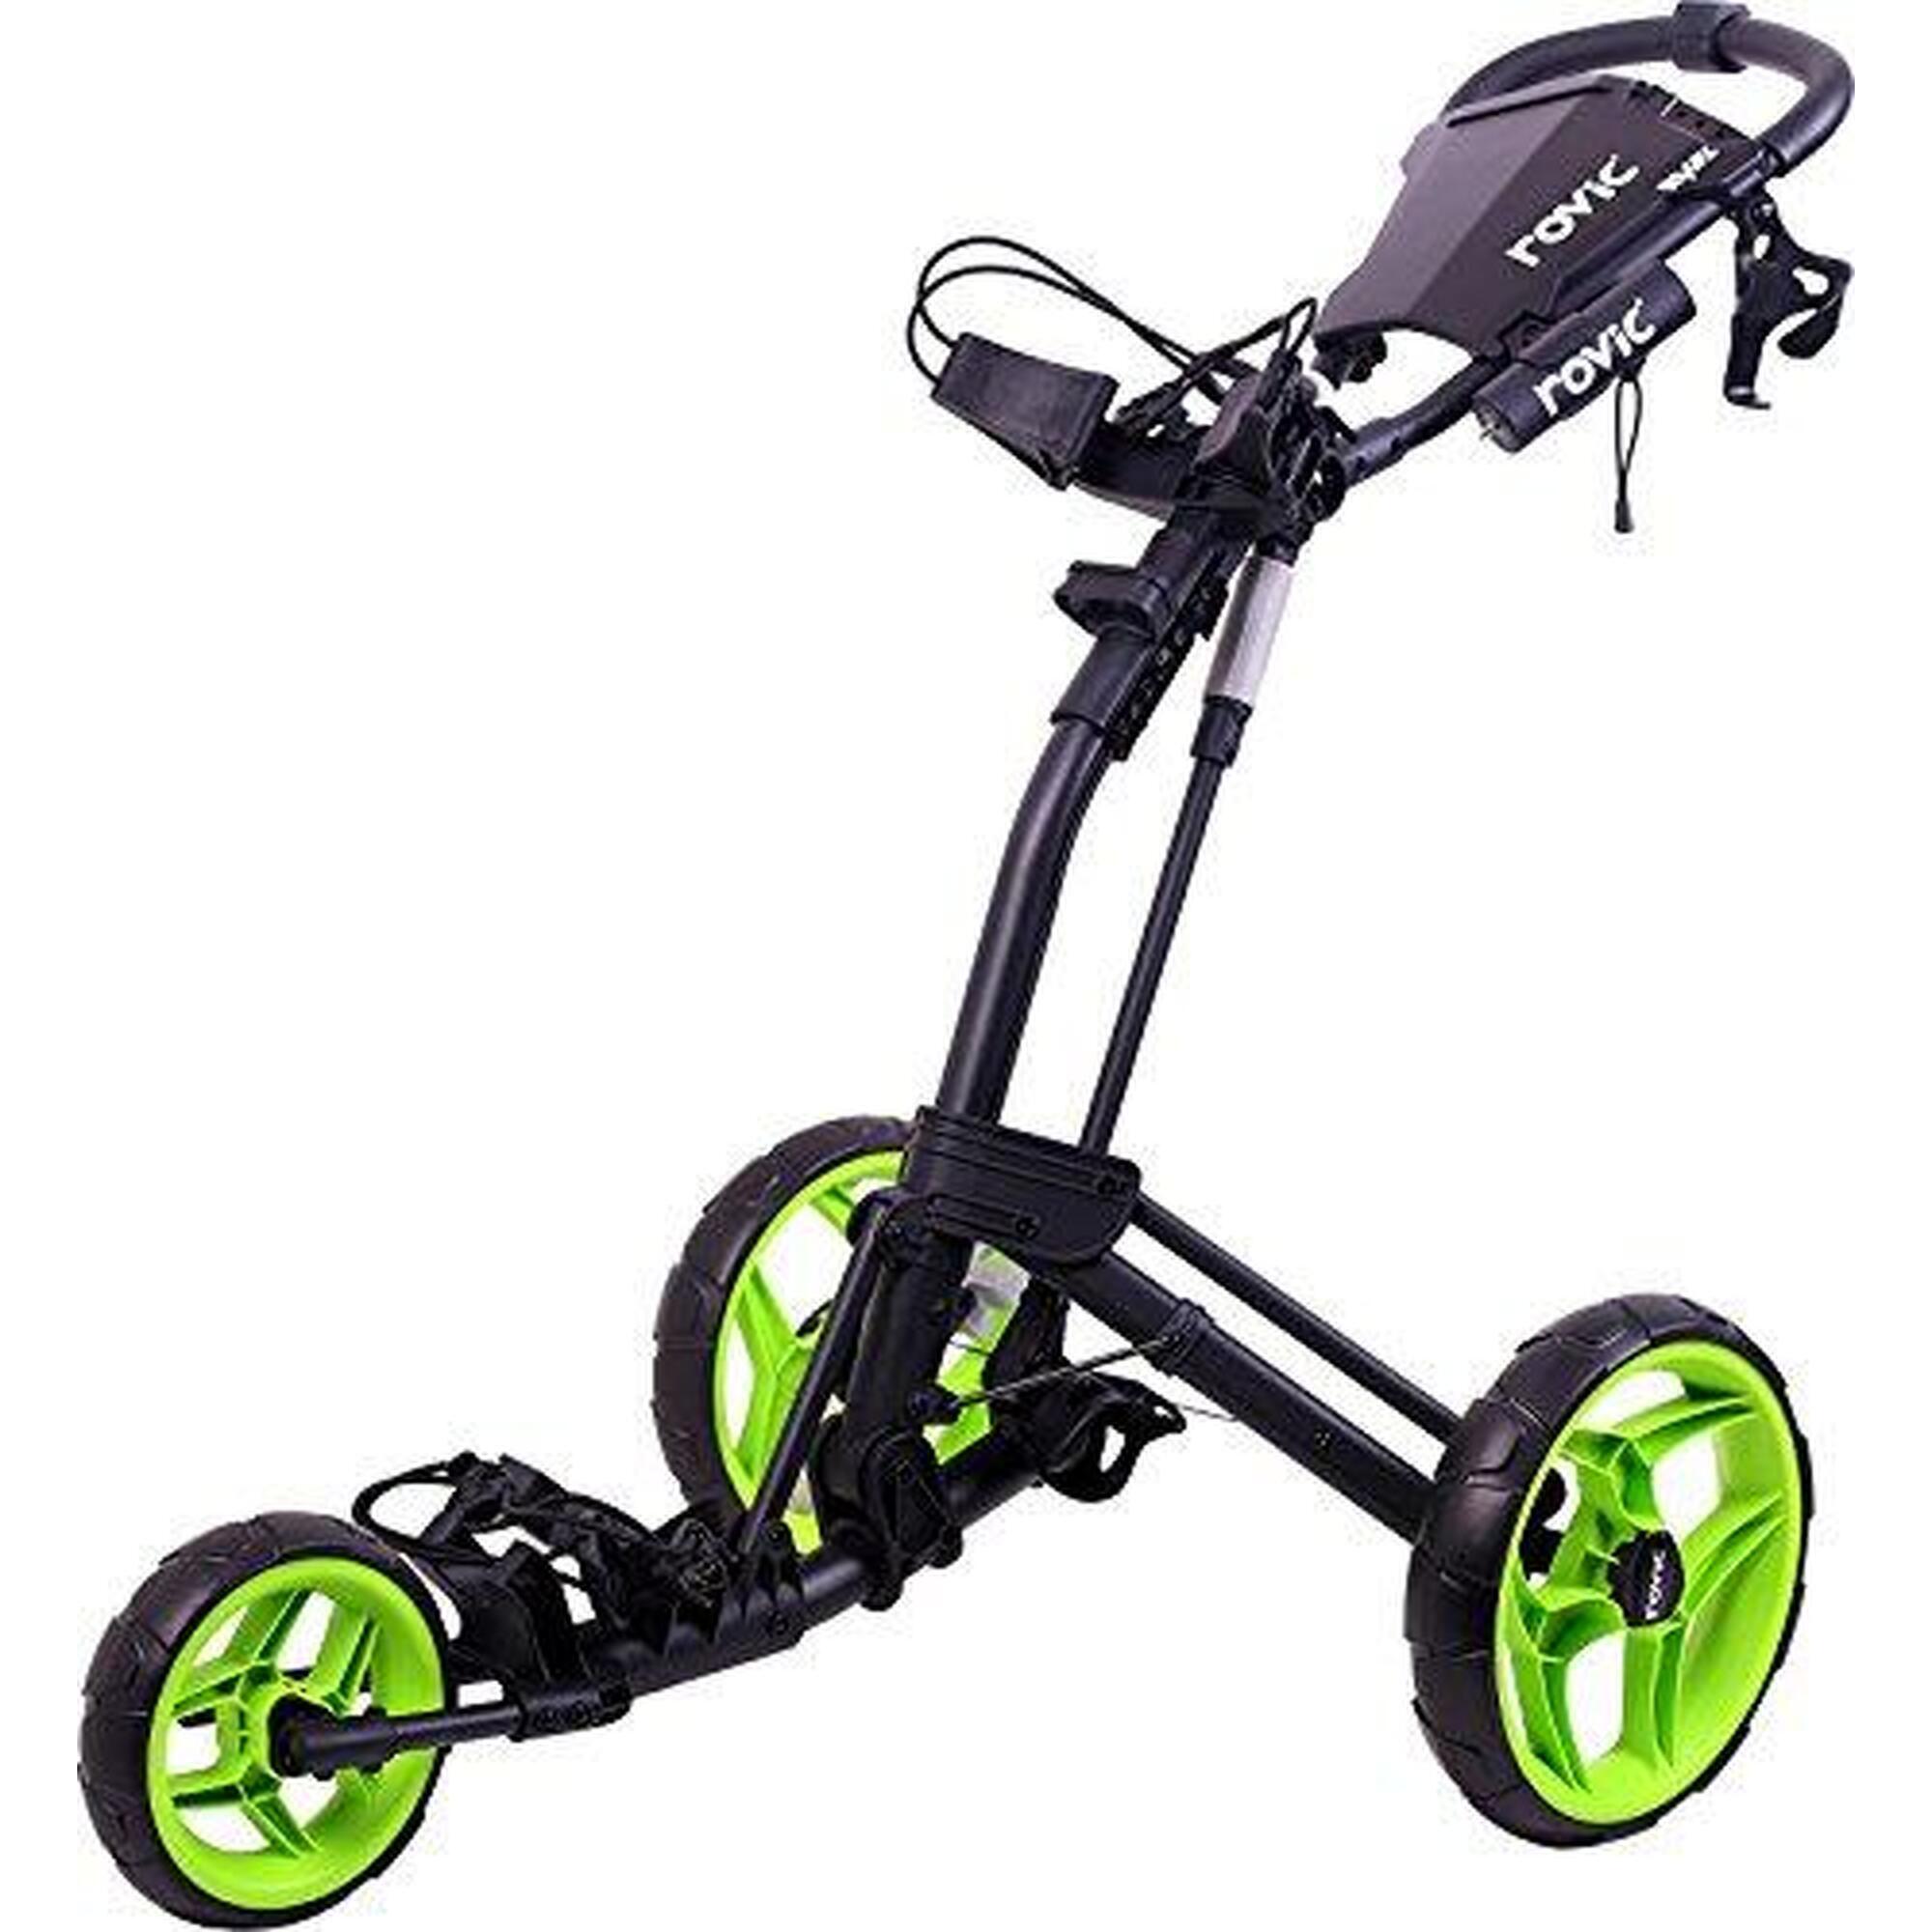 Rovic Rv2L 3 Wheel Golf Trolley charcoal/lime 1/4